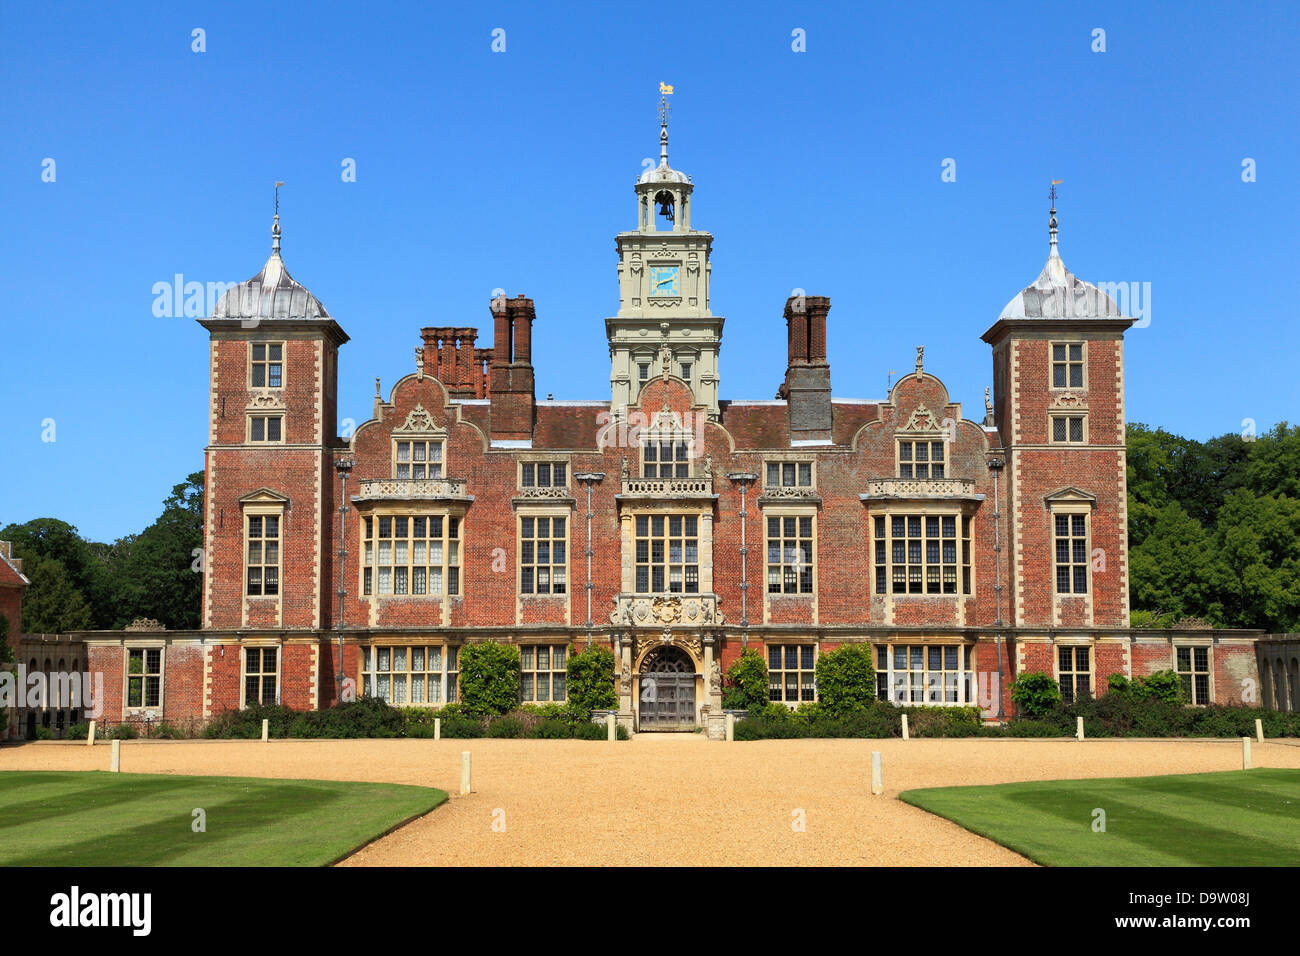 Blickling Hall, Norfolk, England UK, 17th century Jacobean mansion, English stately home homes Stock Photo